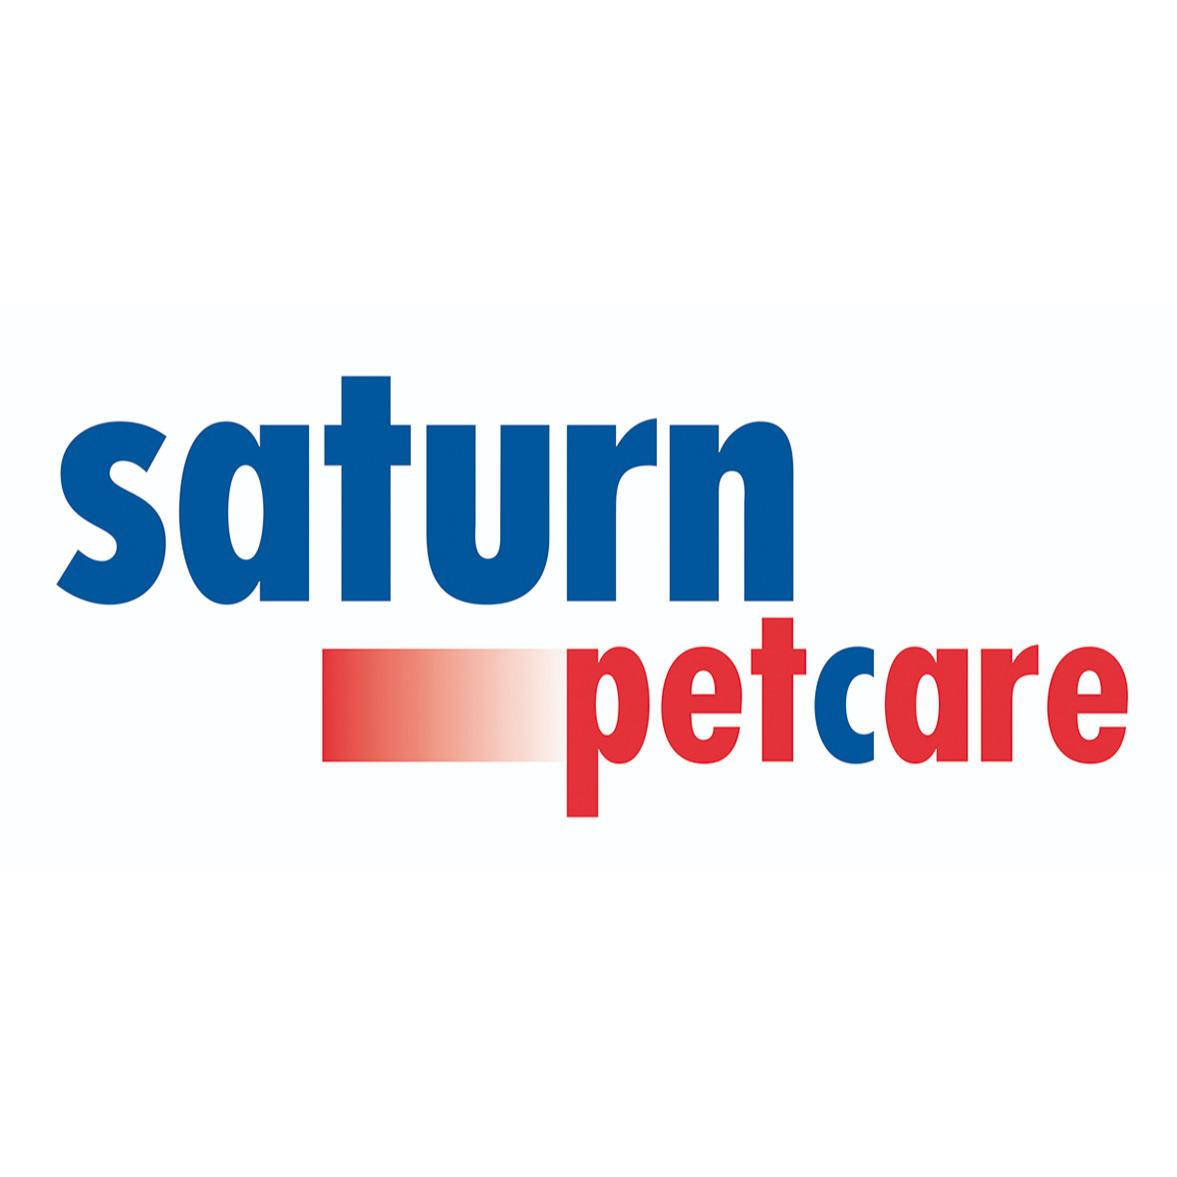 saturn petcare gmbh Logo